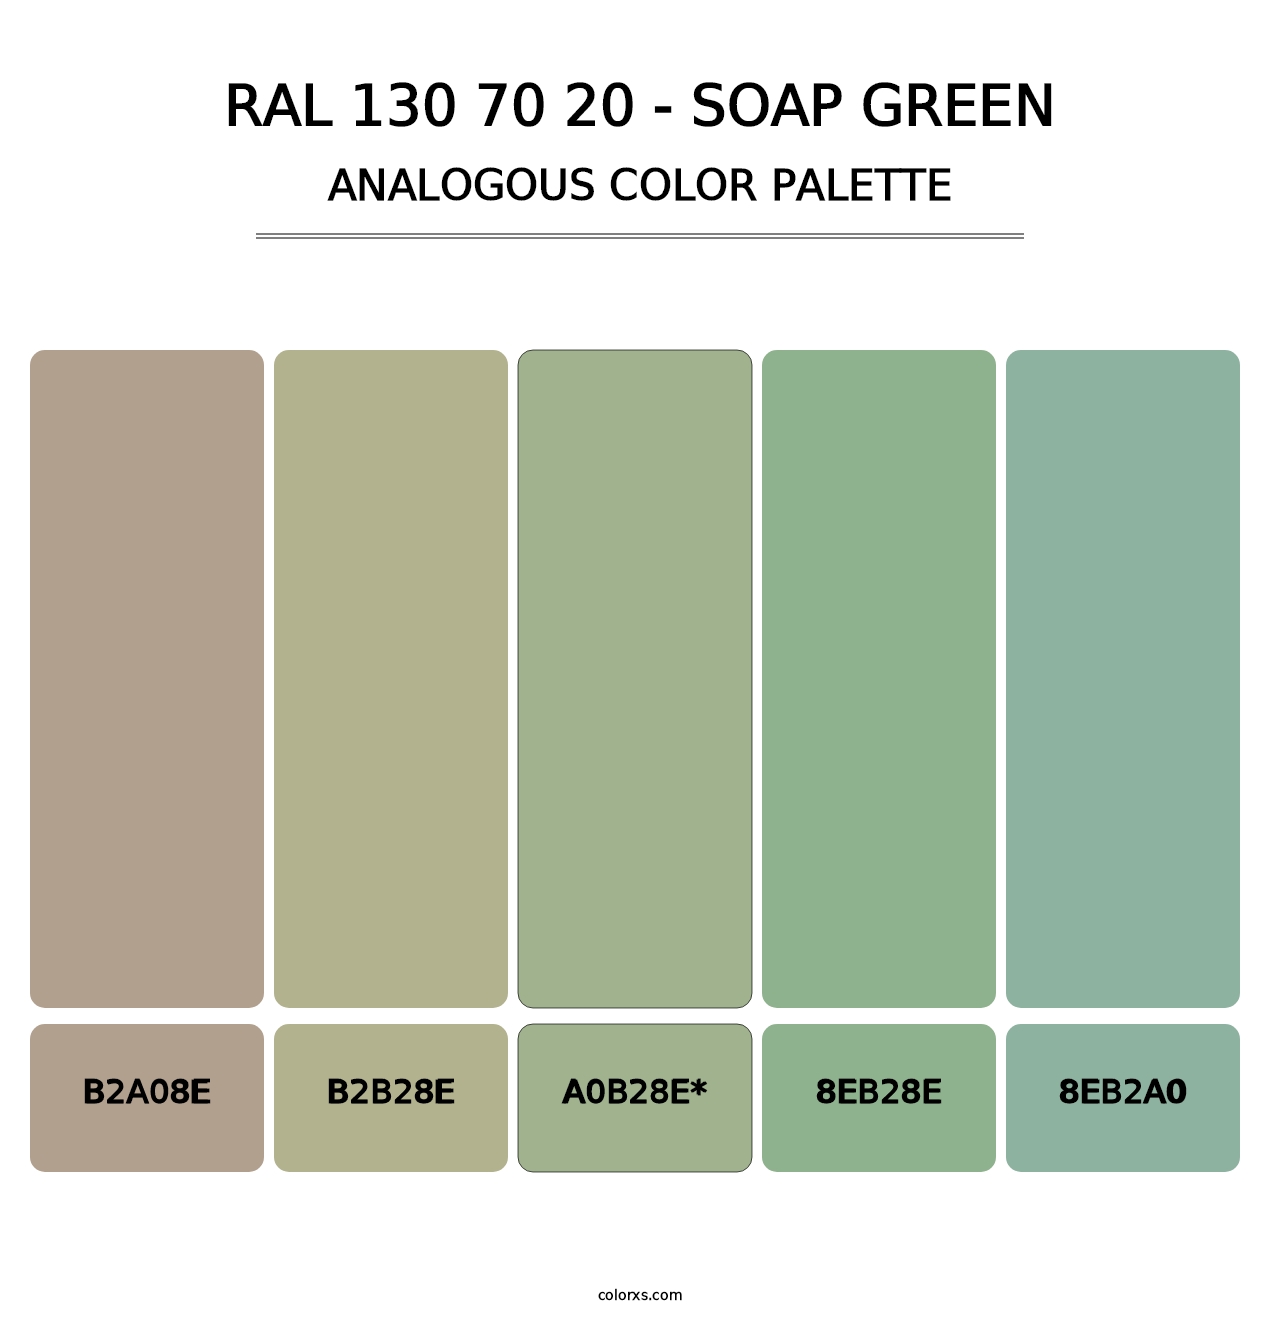 RAL 130 70 20 - Soap Green - Analogous Color Palette